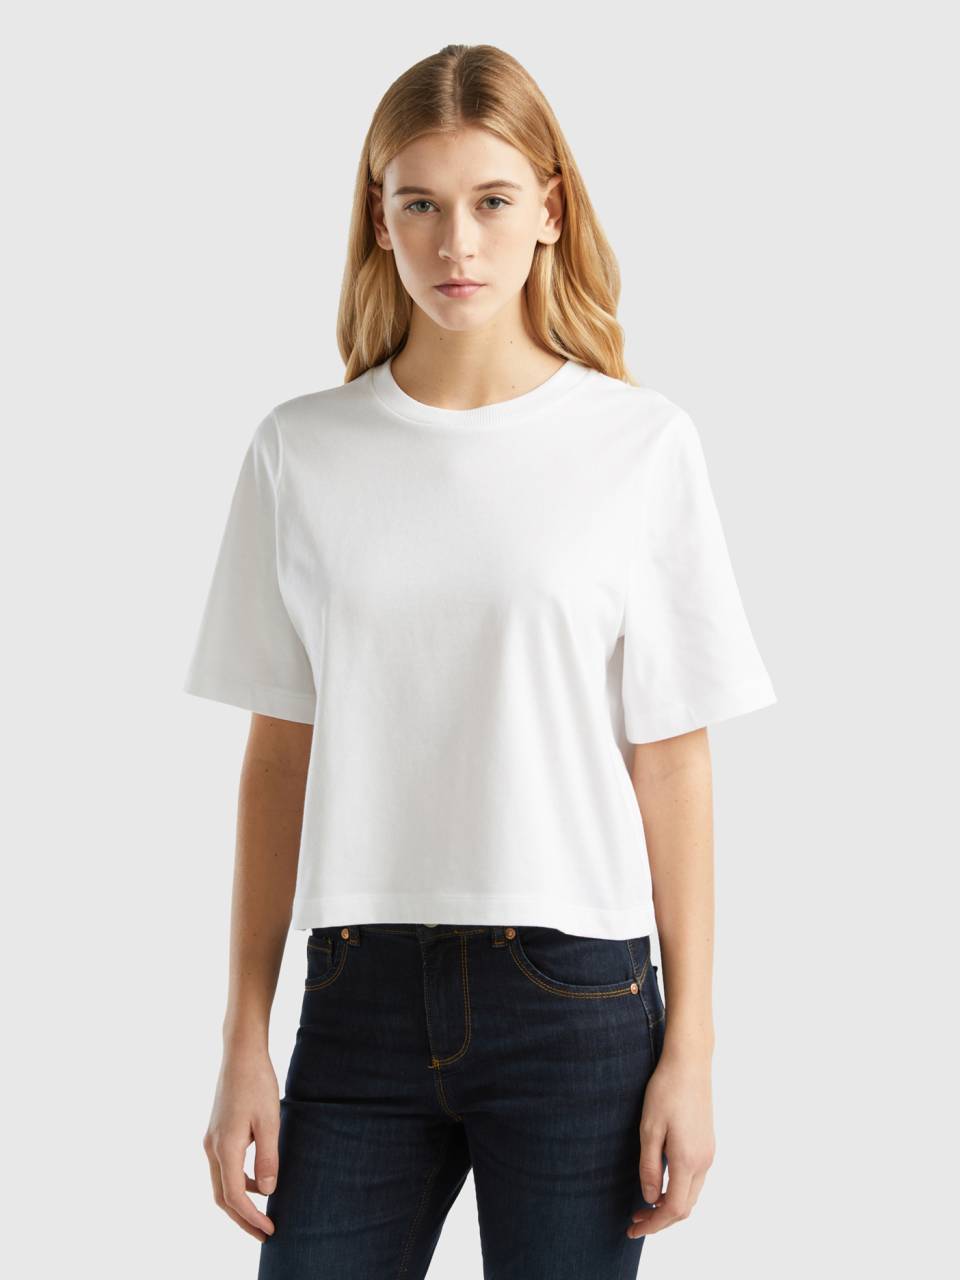 Benetton | t-shirt White boxy 100% - cotton fit